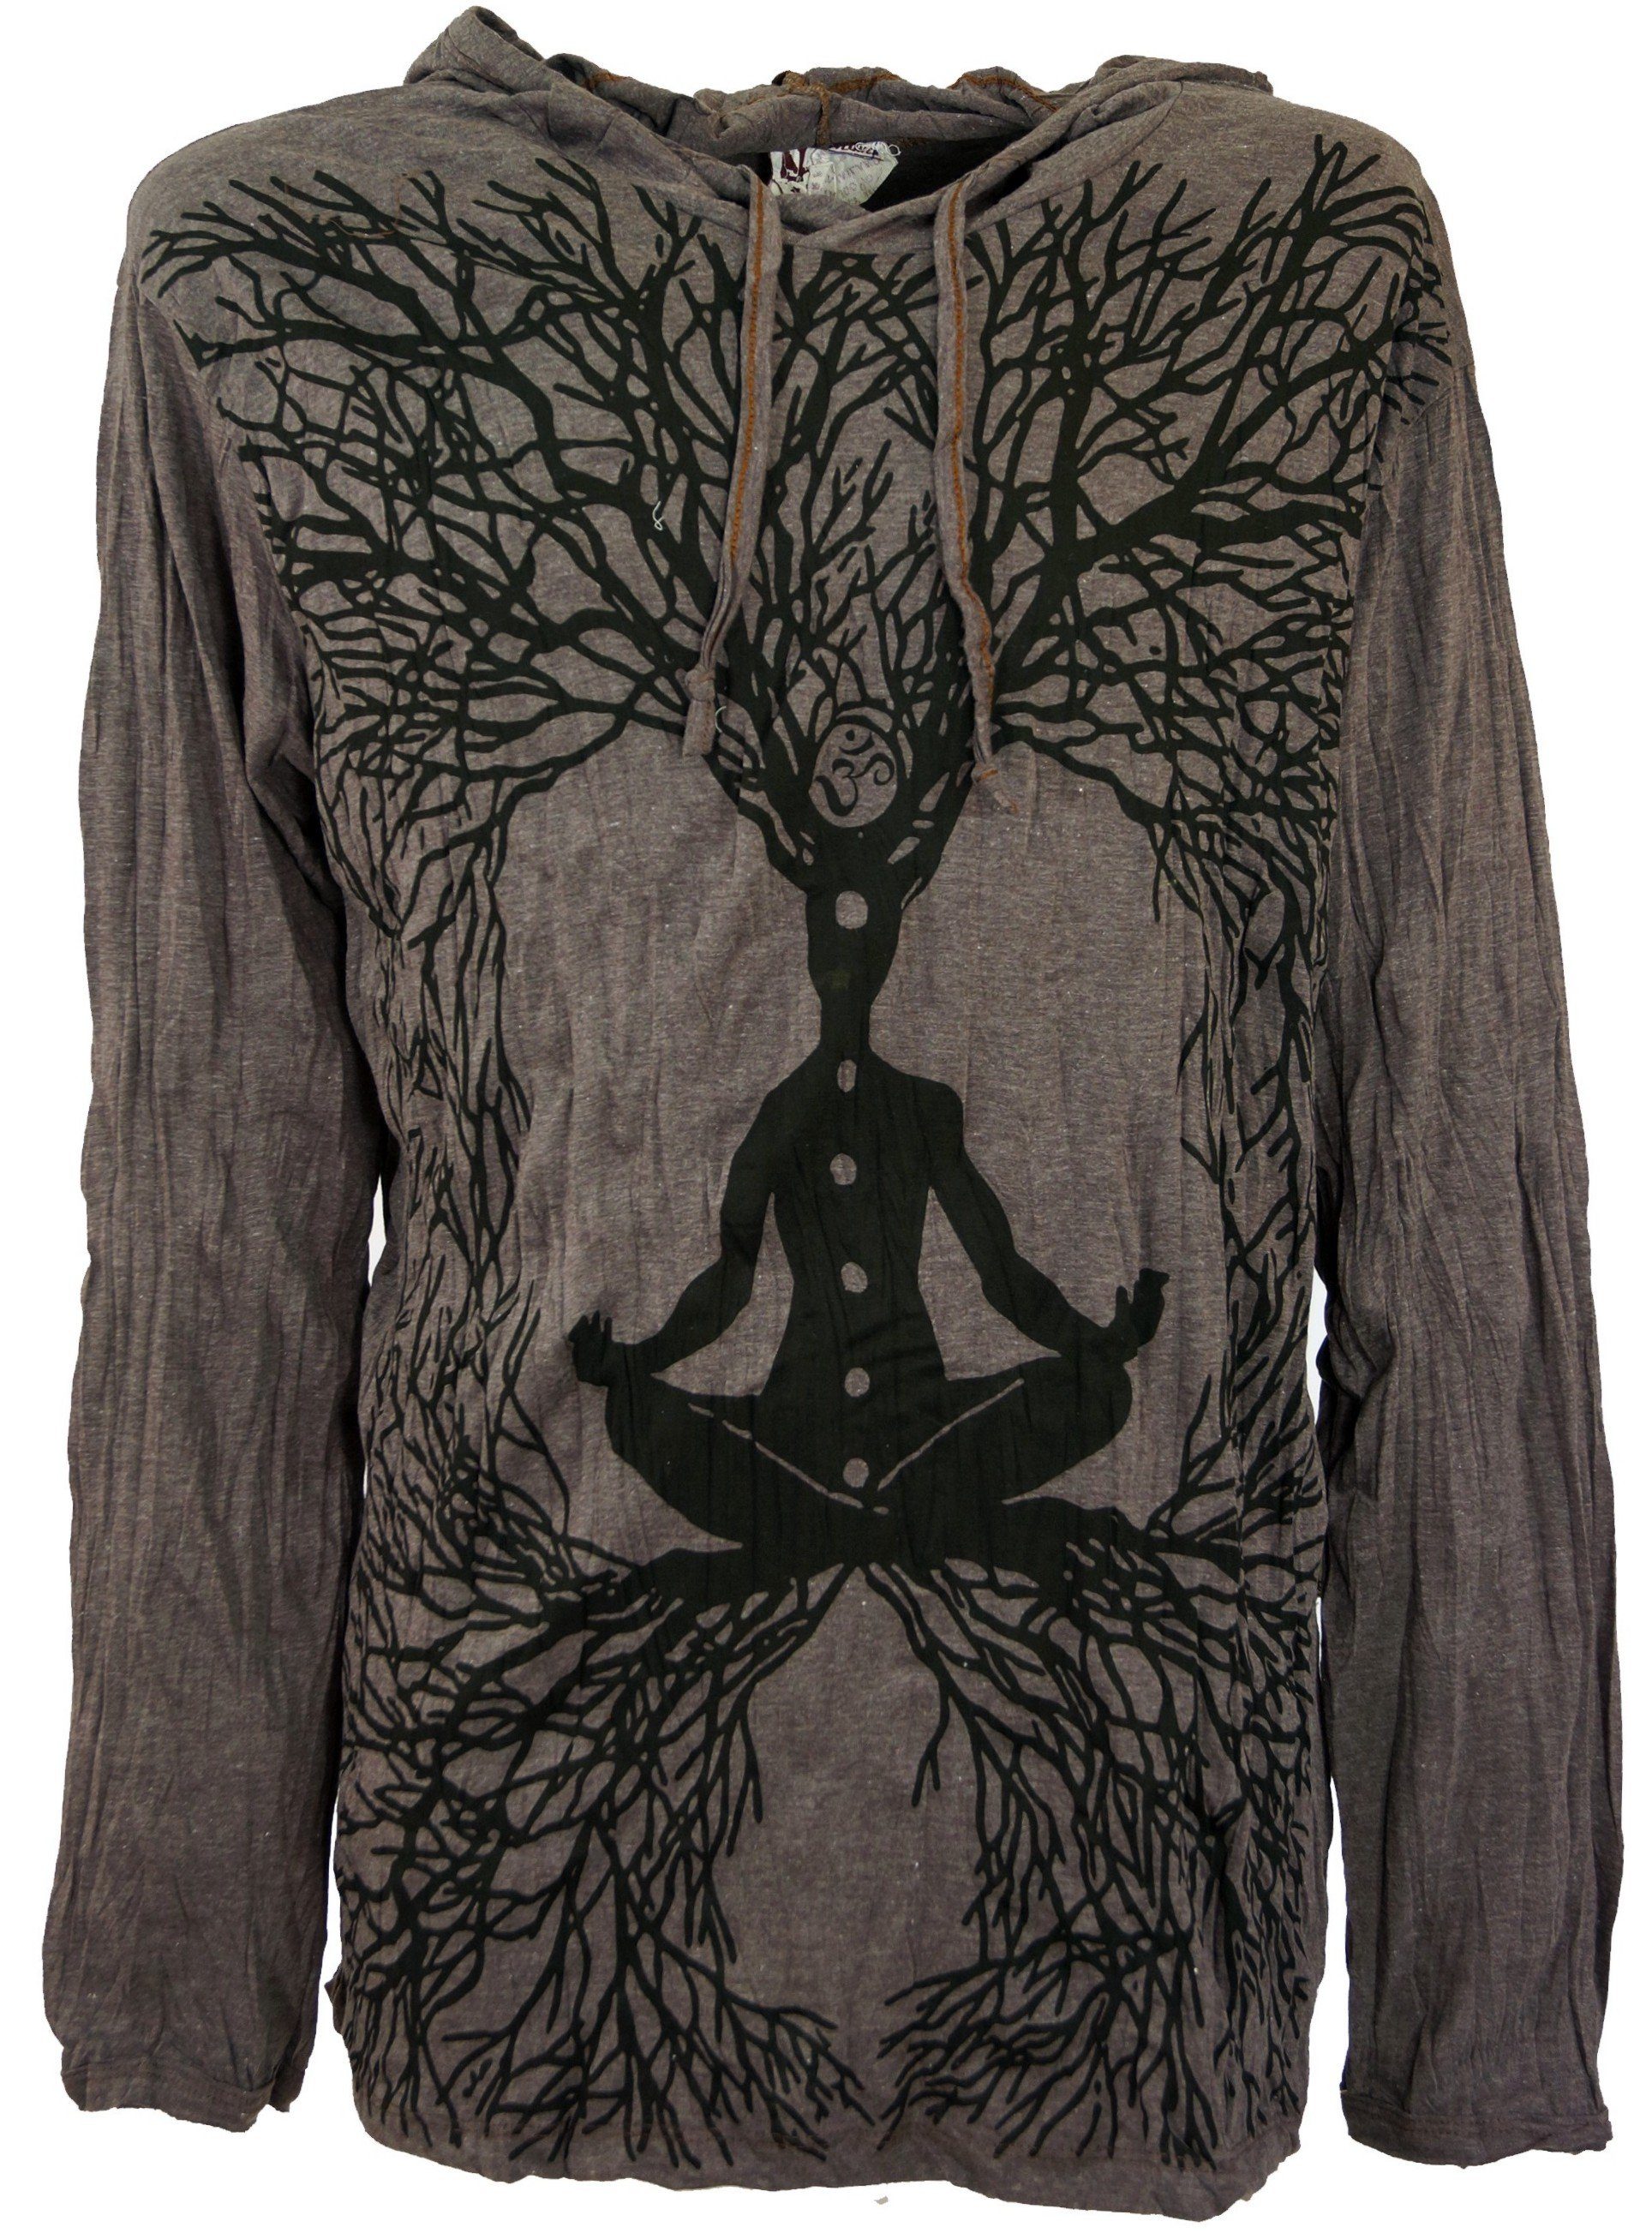 Guru-Shop T-Shirt Sure Langarmshirt, Kapuzenshirt Meditation.. Goa Style, Festival, alternative Bekleidung taupe